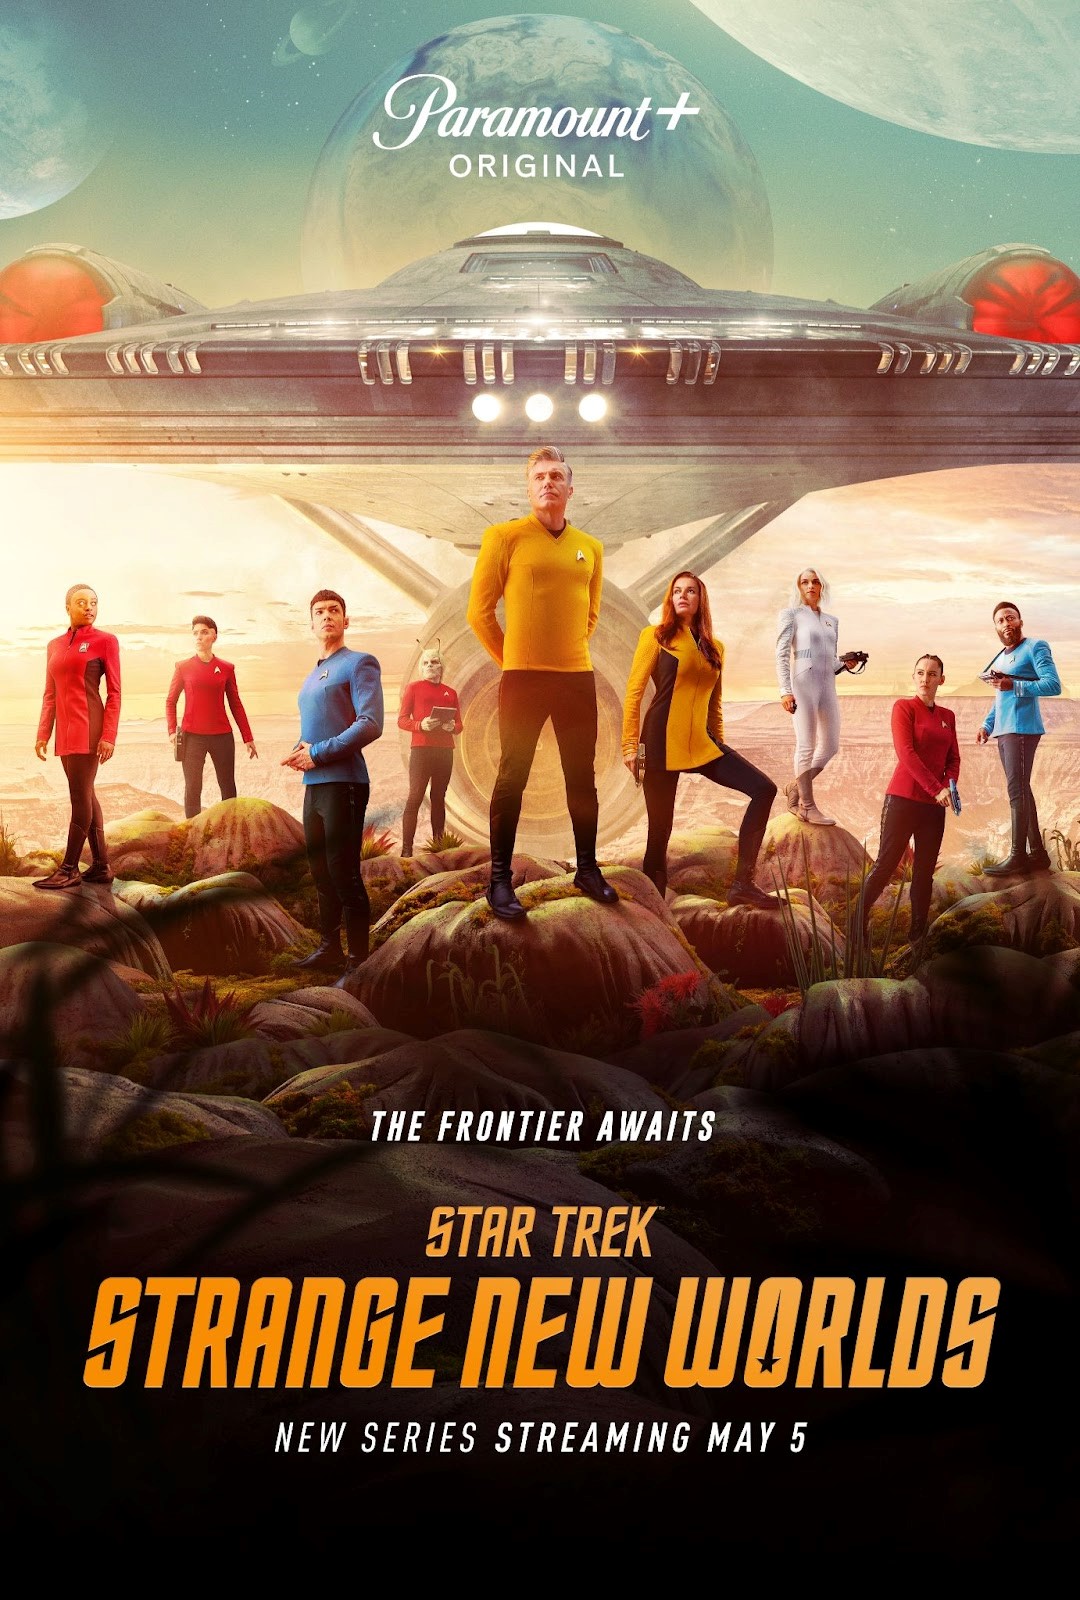 NEW ROLLED Star Trek The Original Series Spock Portrait Image 24 x 36 Poster 